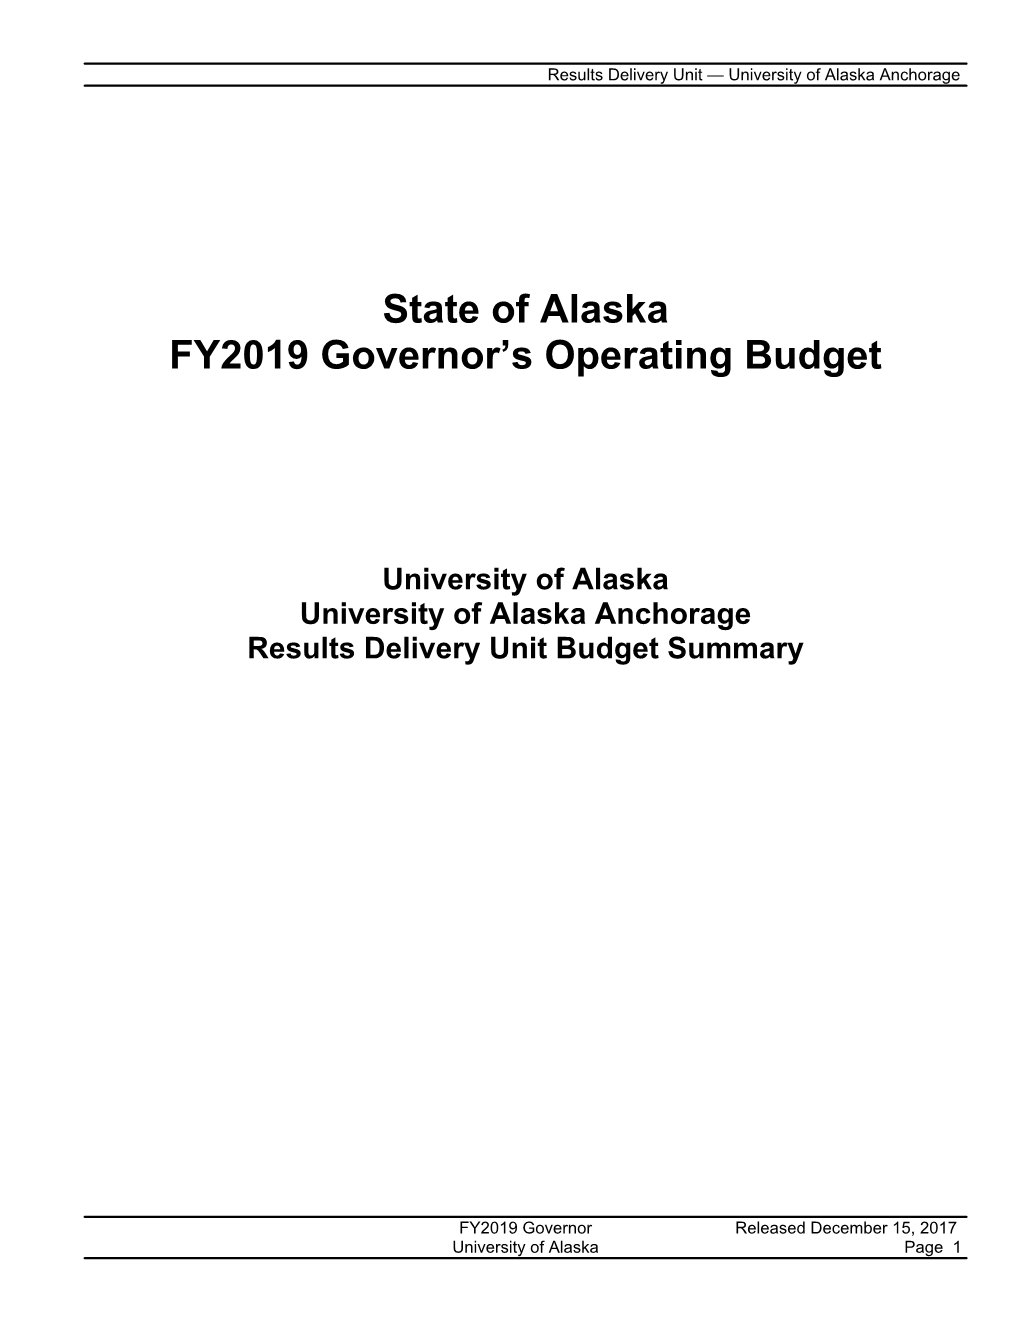 State of Alaska FY2019 Governor's Operating Budget